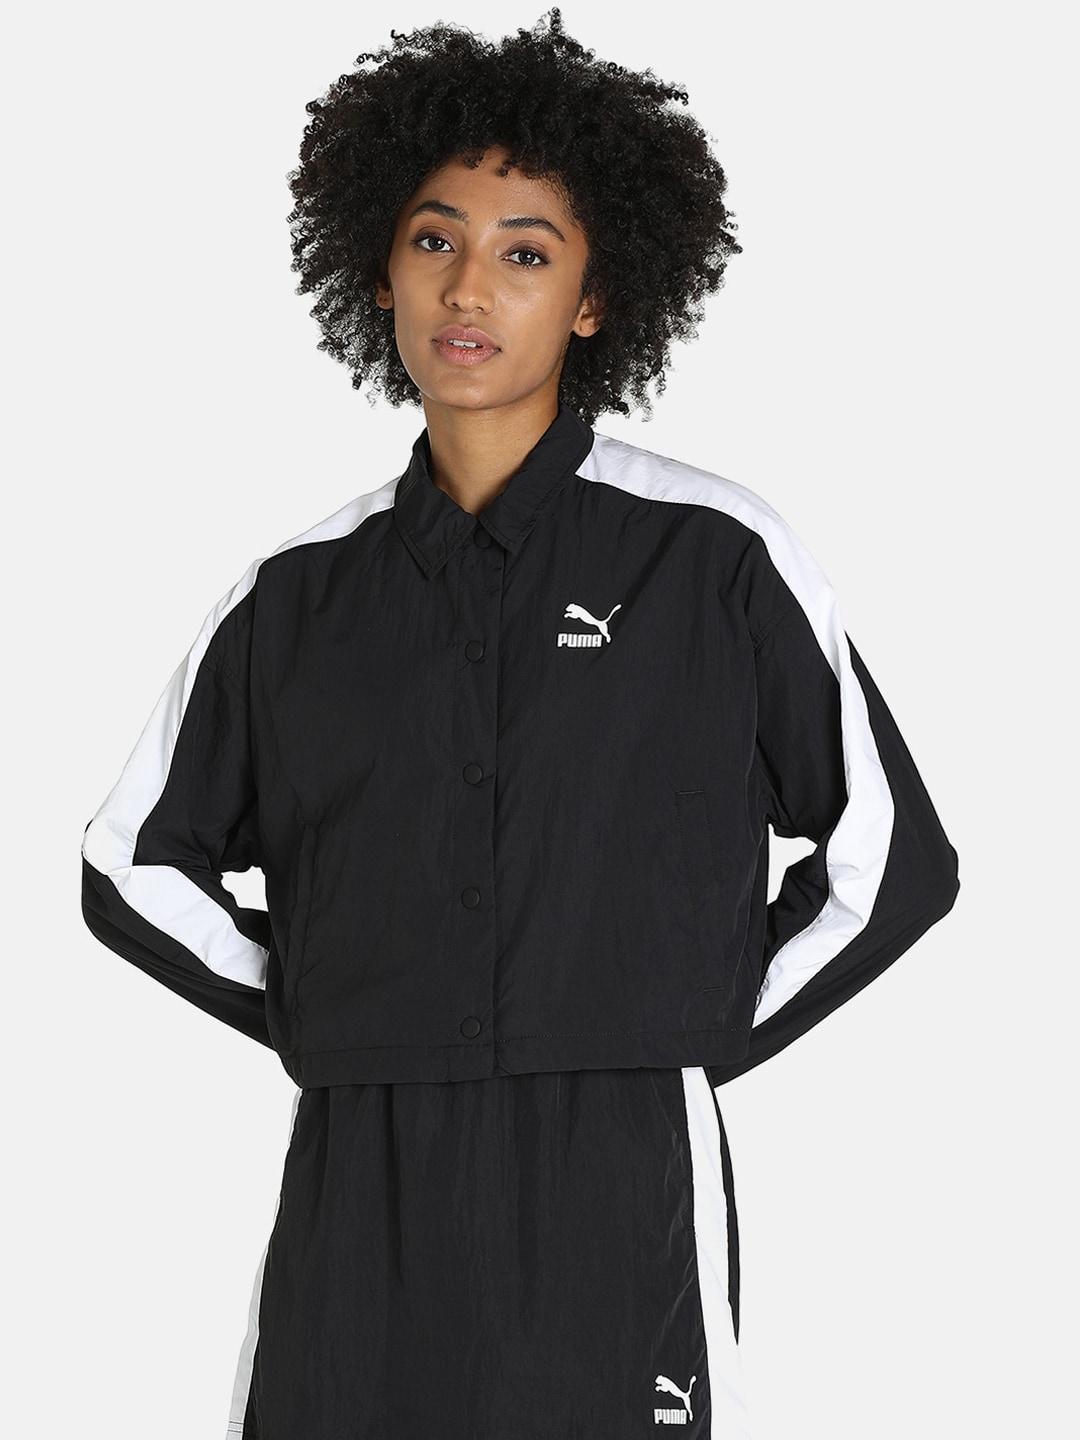 puma women black & white colorblocked jackets